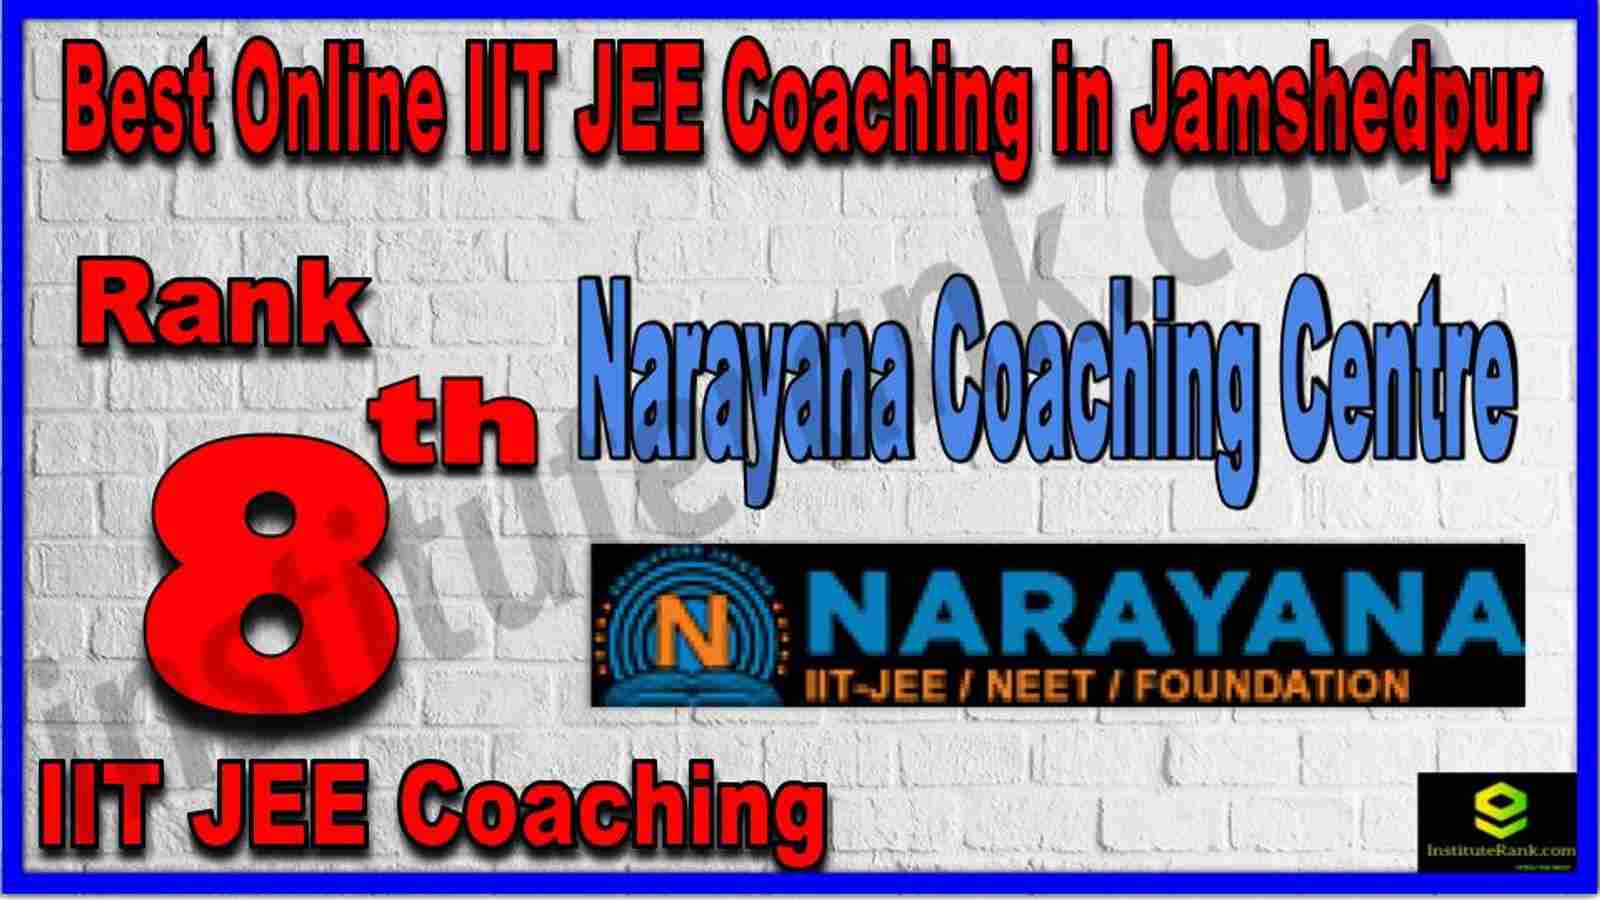 Rank 8th Best Online IIT JEE Coaching in Jamshedpur